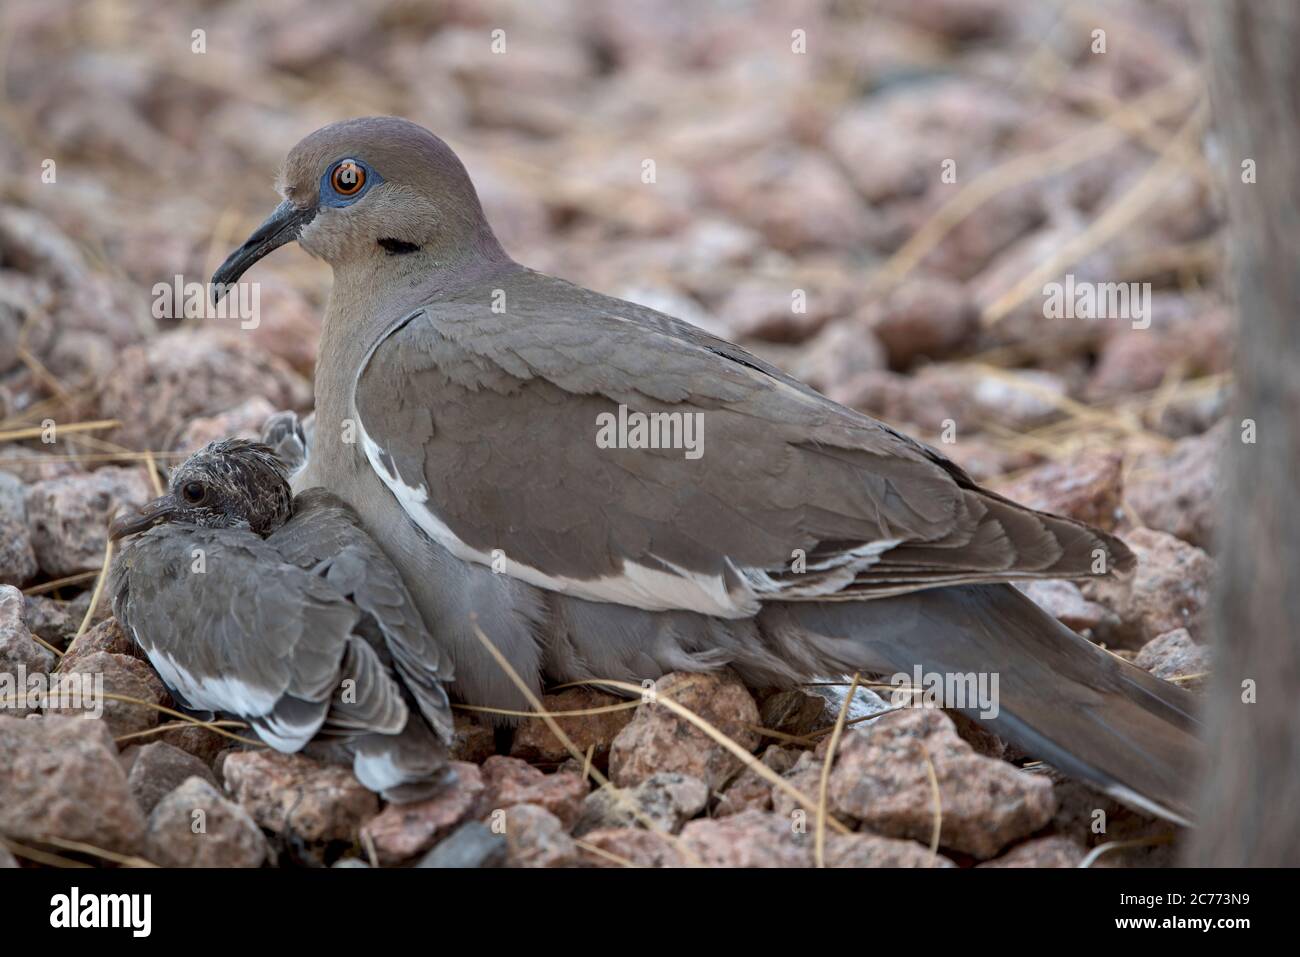 Mother Dove protecting her newborn babies. Stock Photo